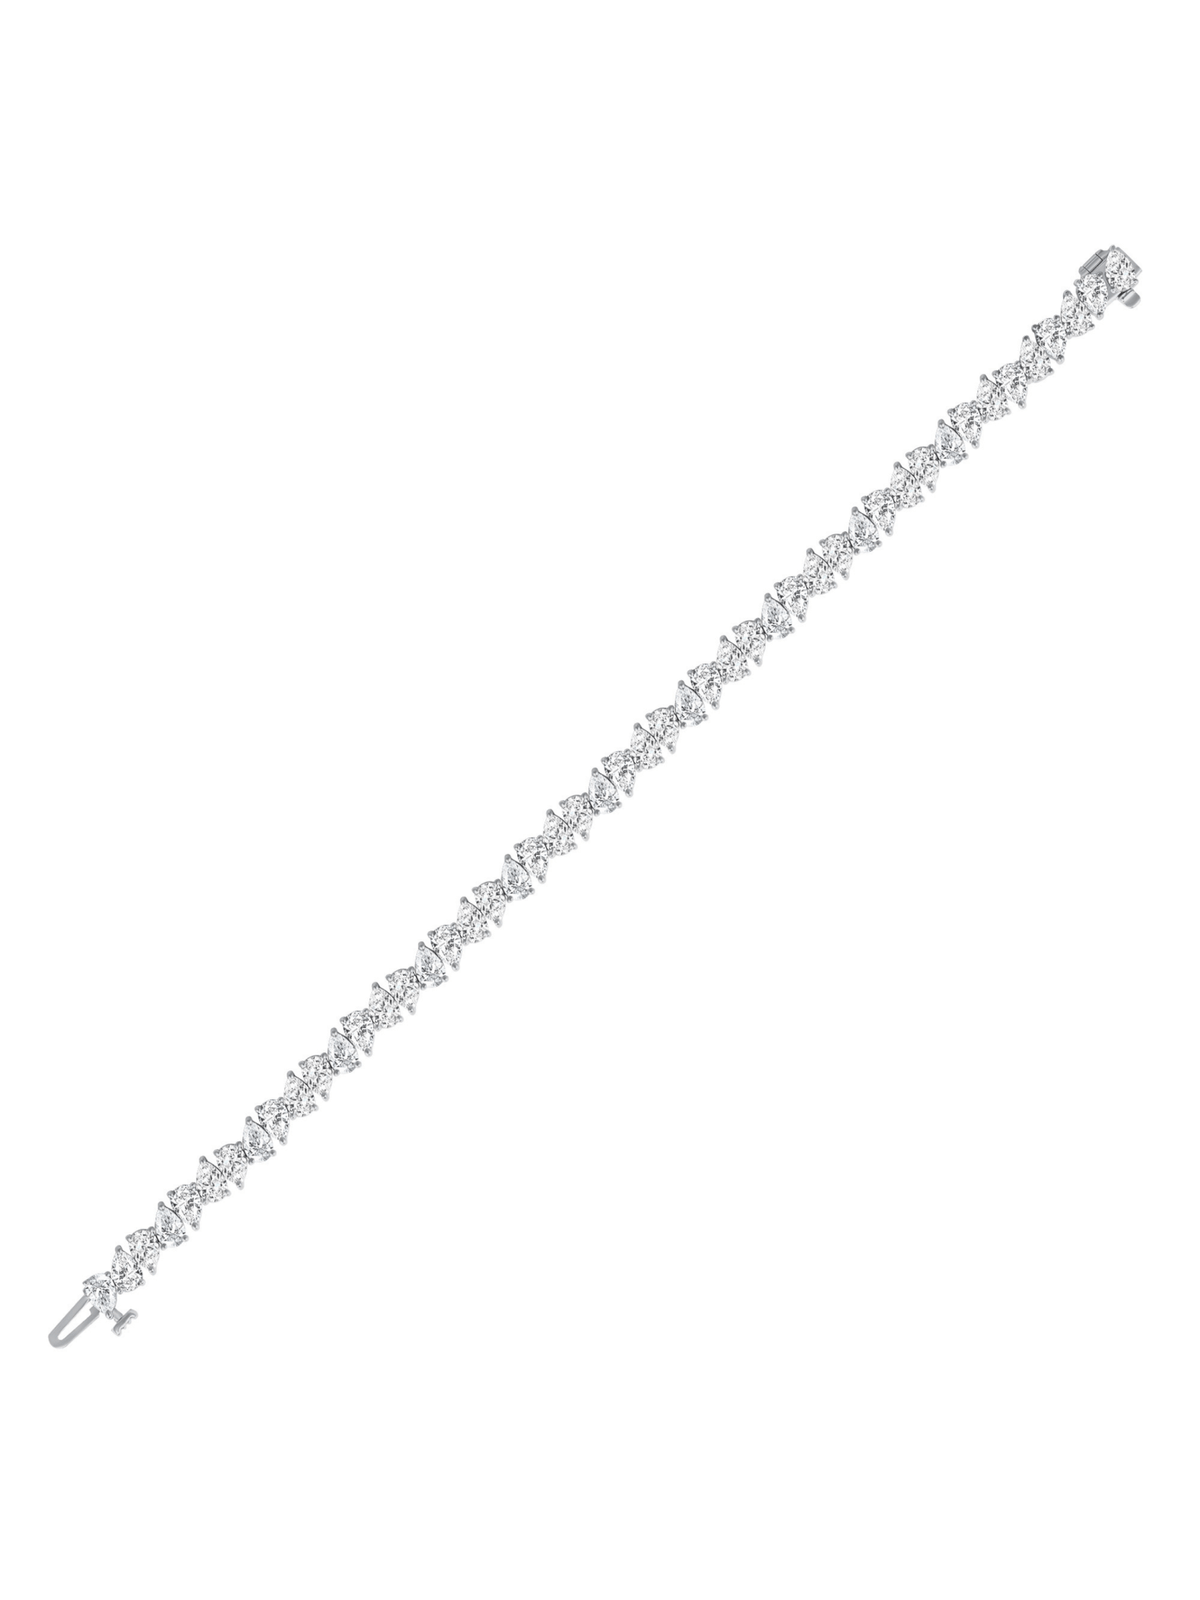 Pear shape diamond tennis bracelet in 18K white gold set on a white background